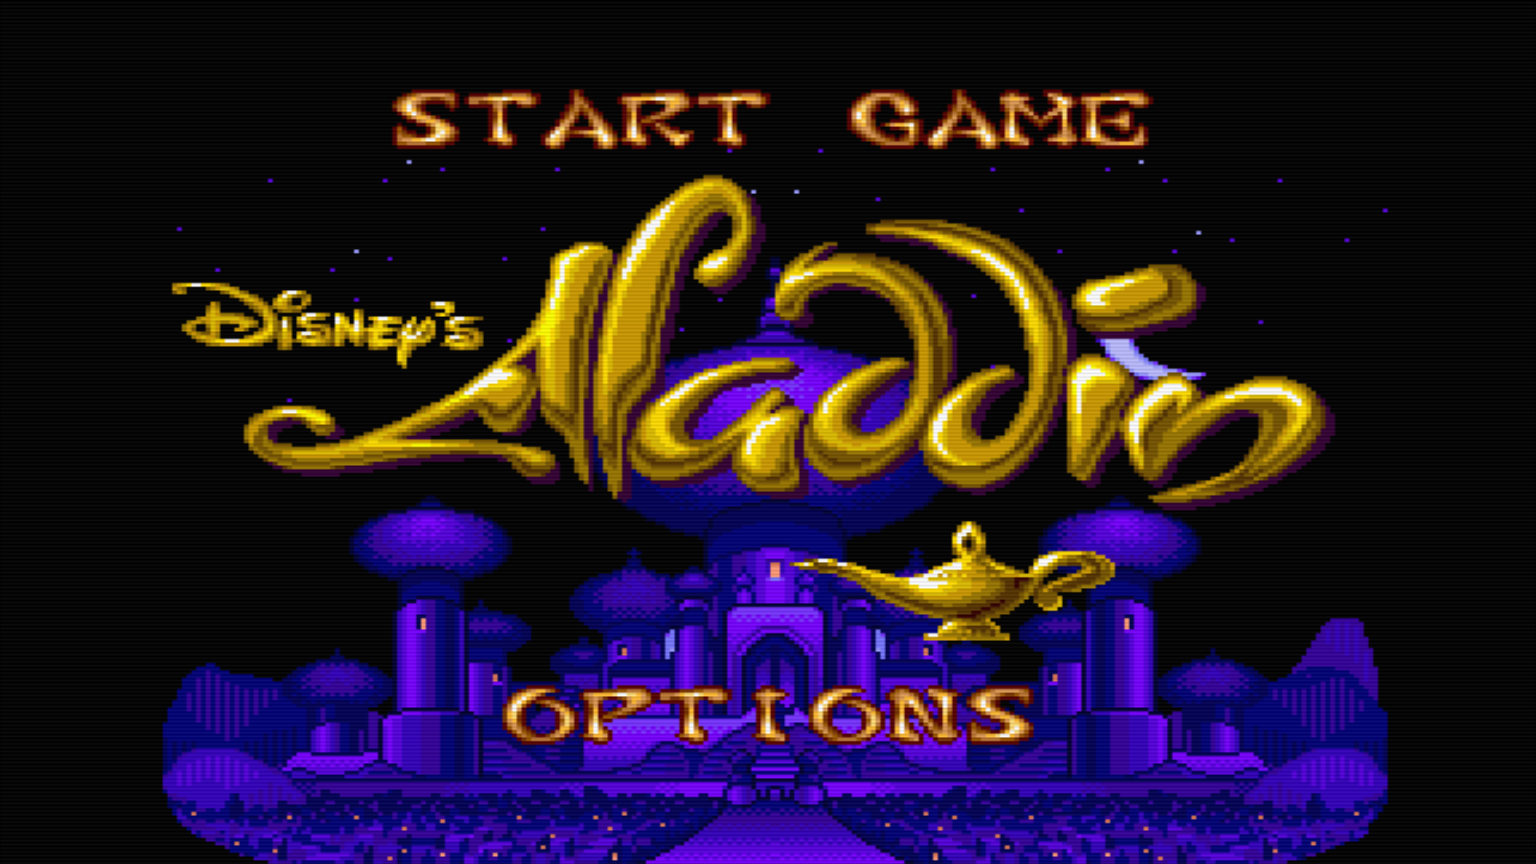 Download Disney's Aladdin 1993 For Windows 10, 8, 7